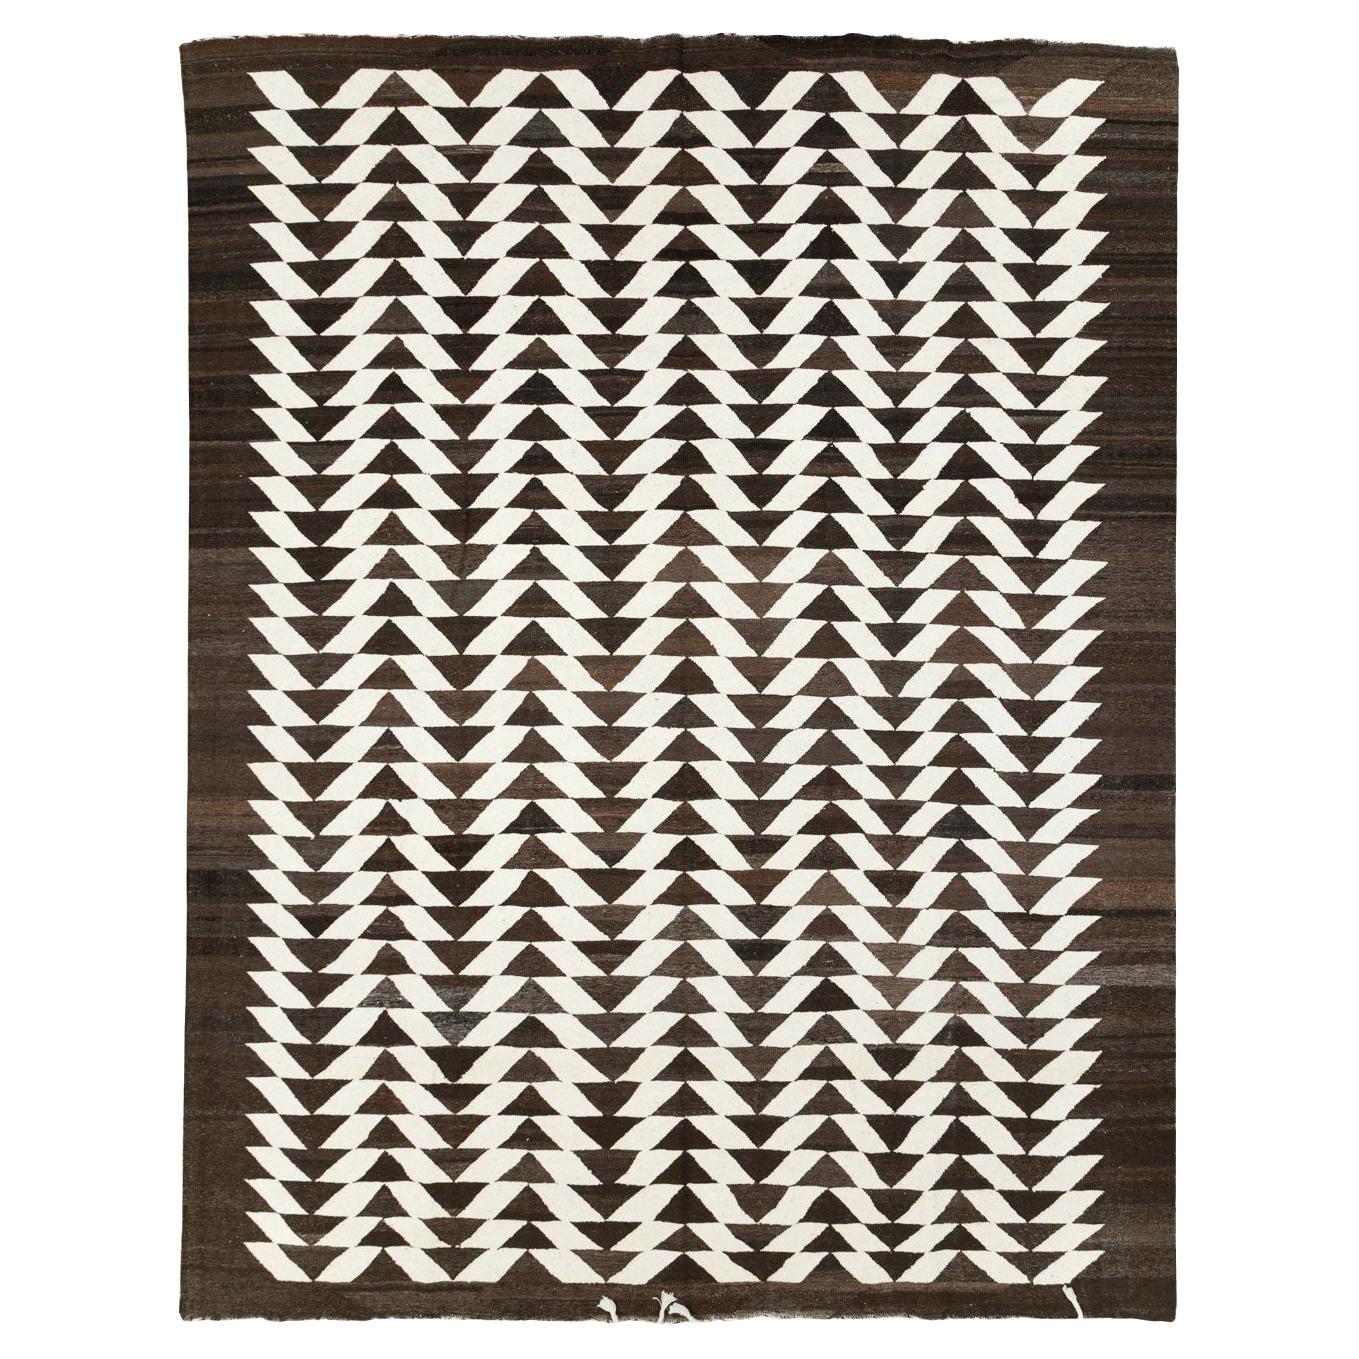 Contemporary Turkish Flatweave Kilim Room Size Carpet in Cream and Dark Brown